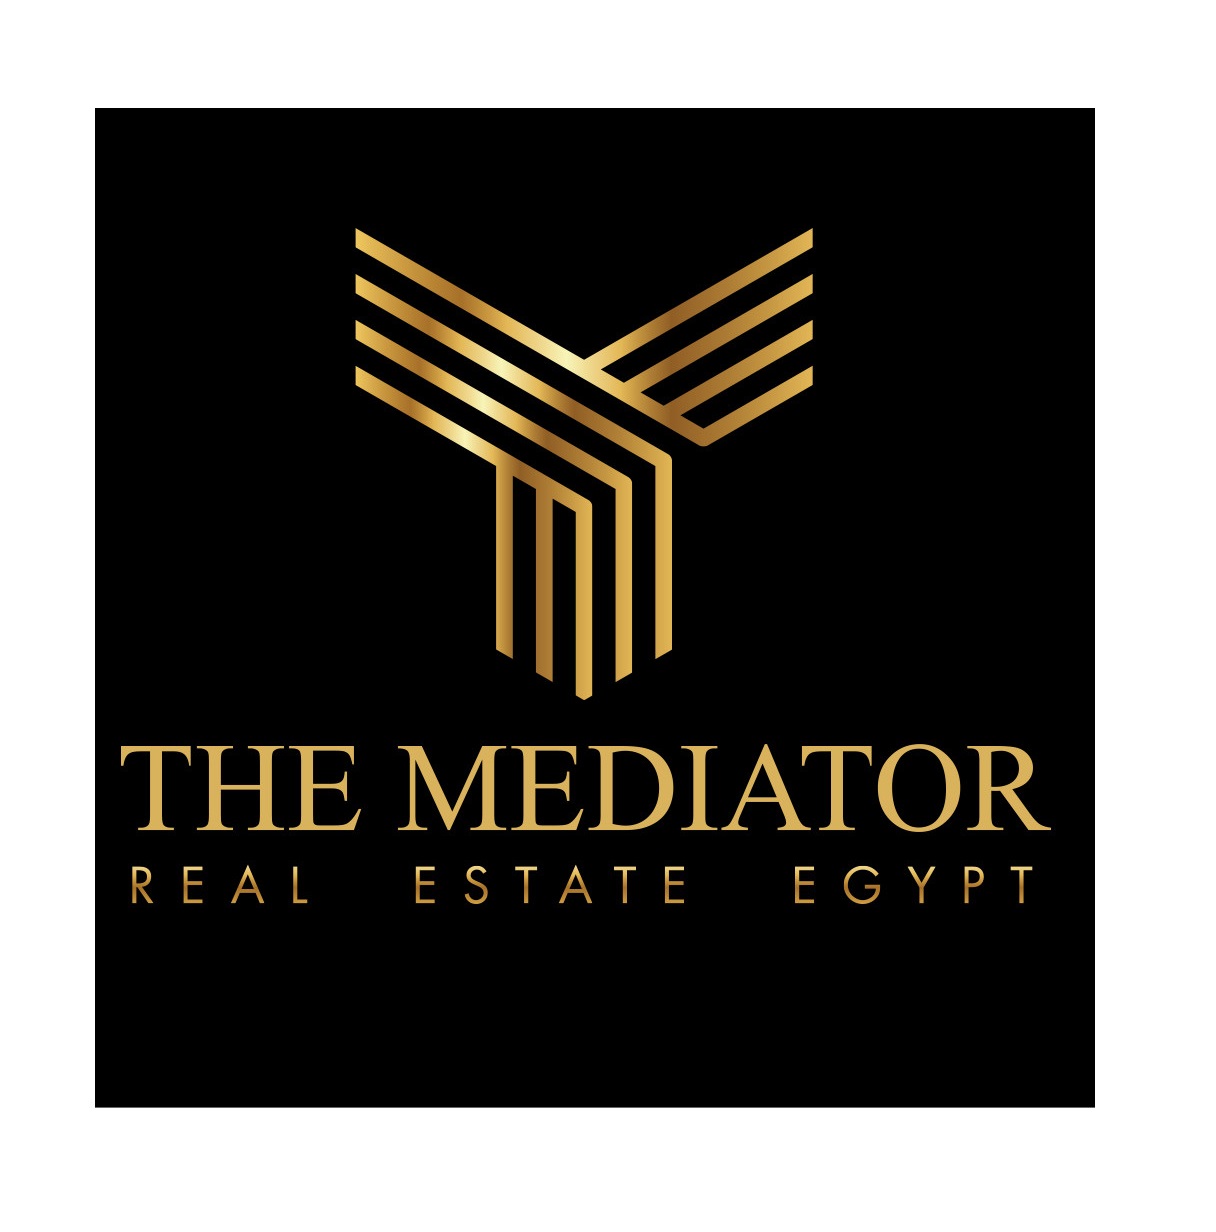 The Mediator Real Estate